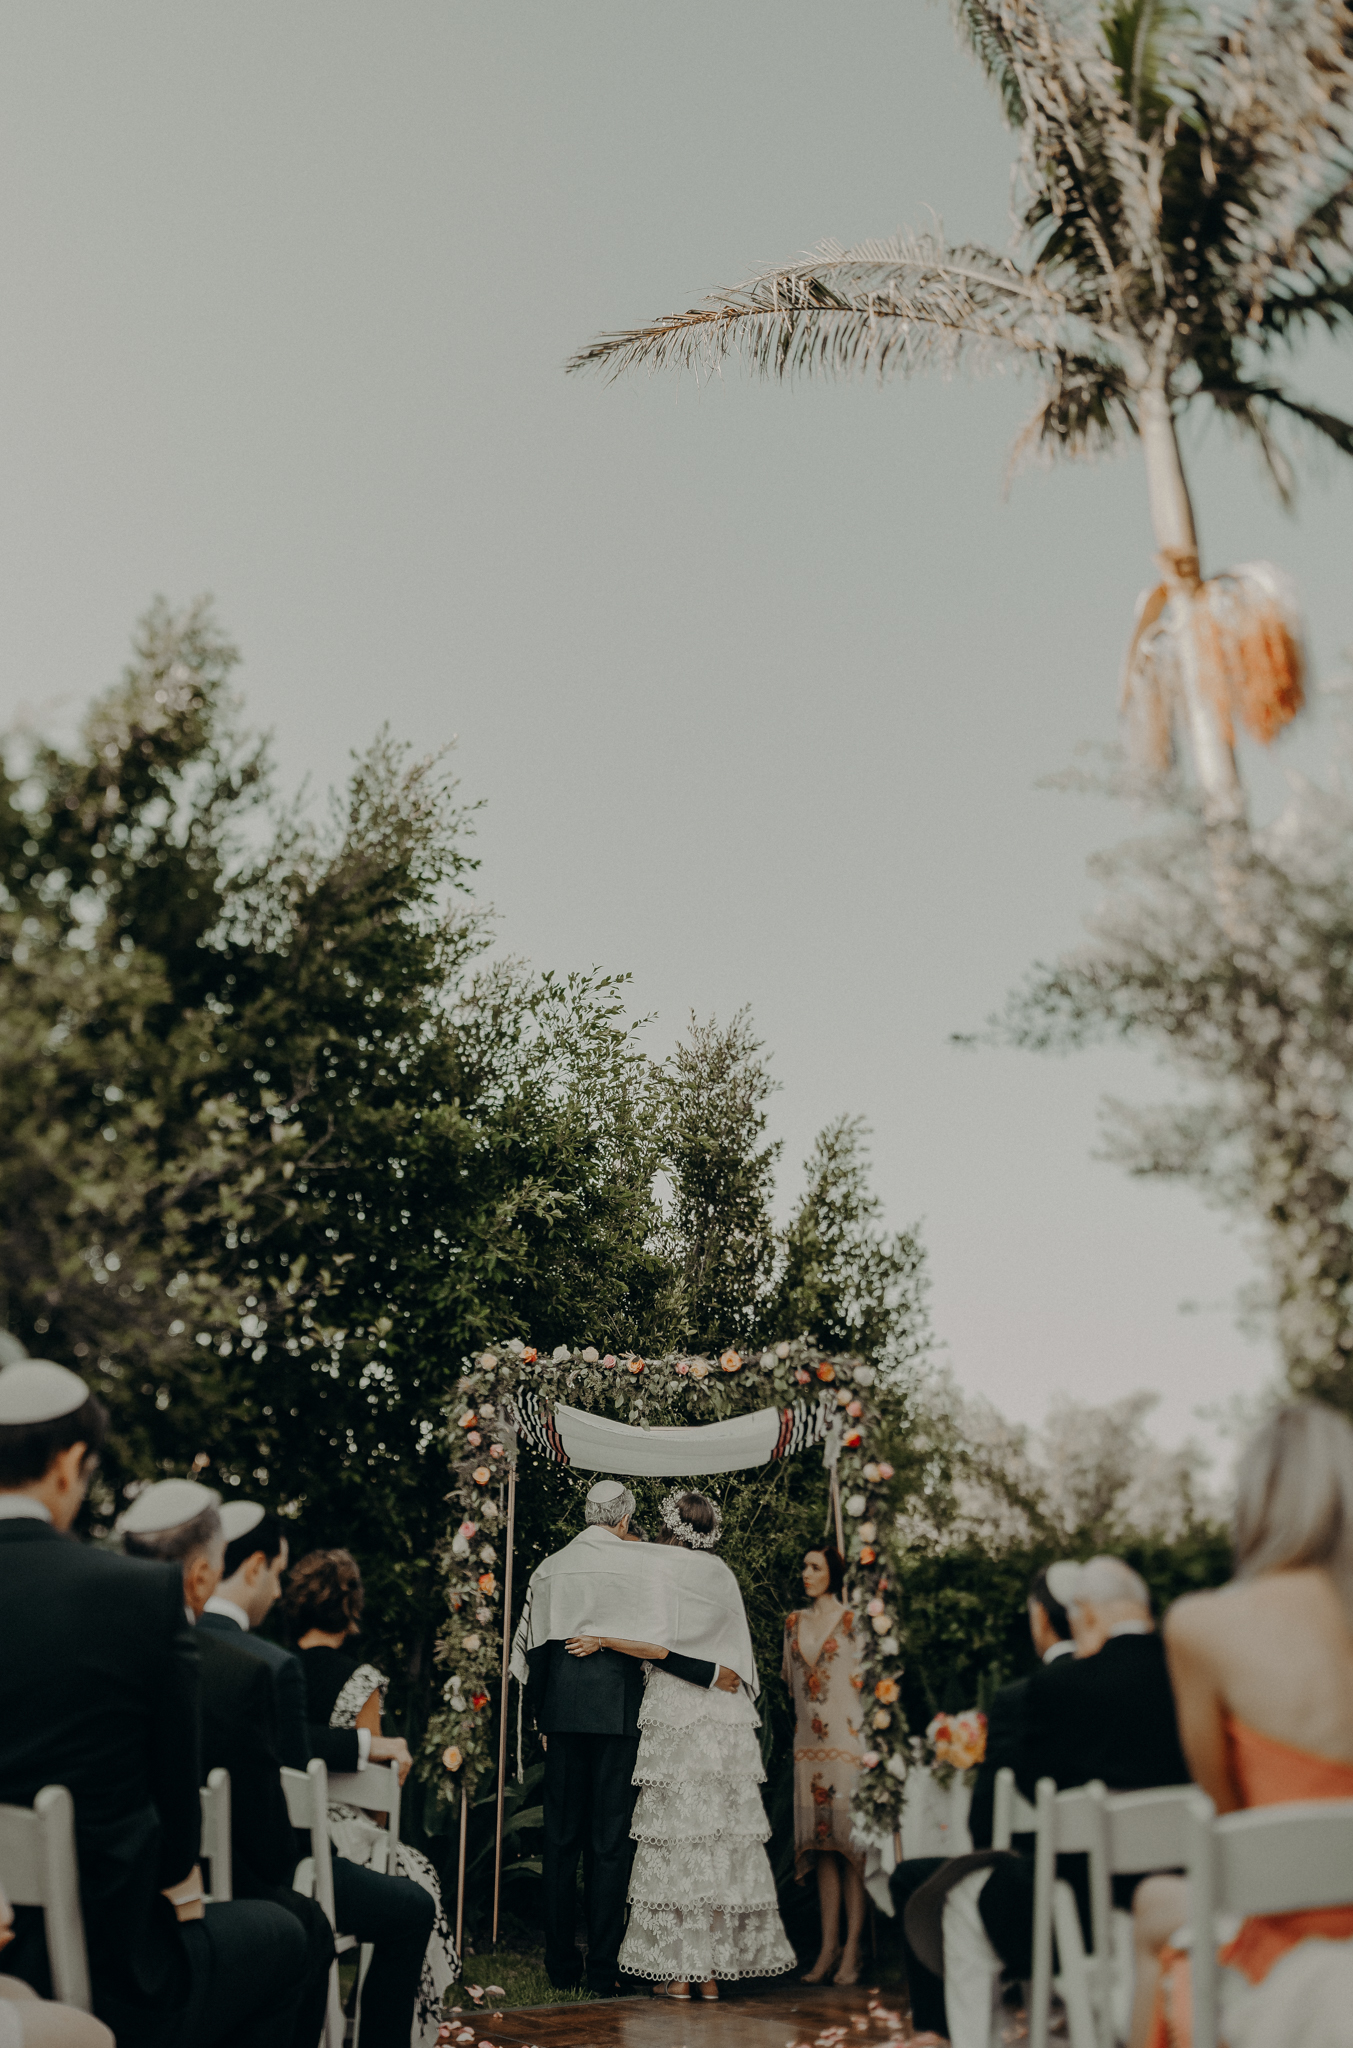 Isaiah + Taylor Photography - Private Estate Backyard Wedding - Beverly Hills - Los Angeles Wedding Photographer - 79.jpg